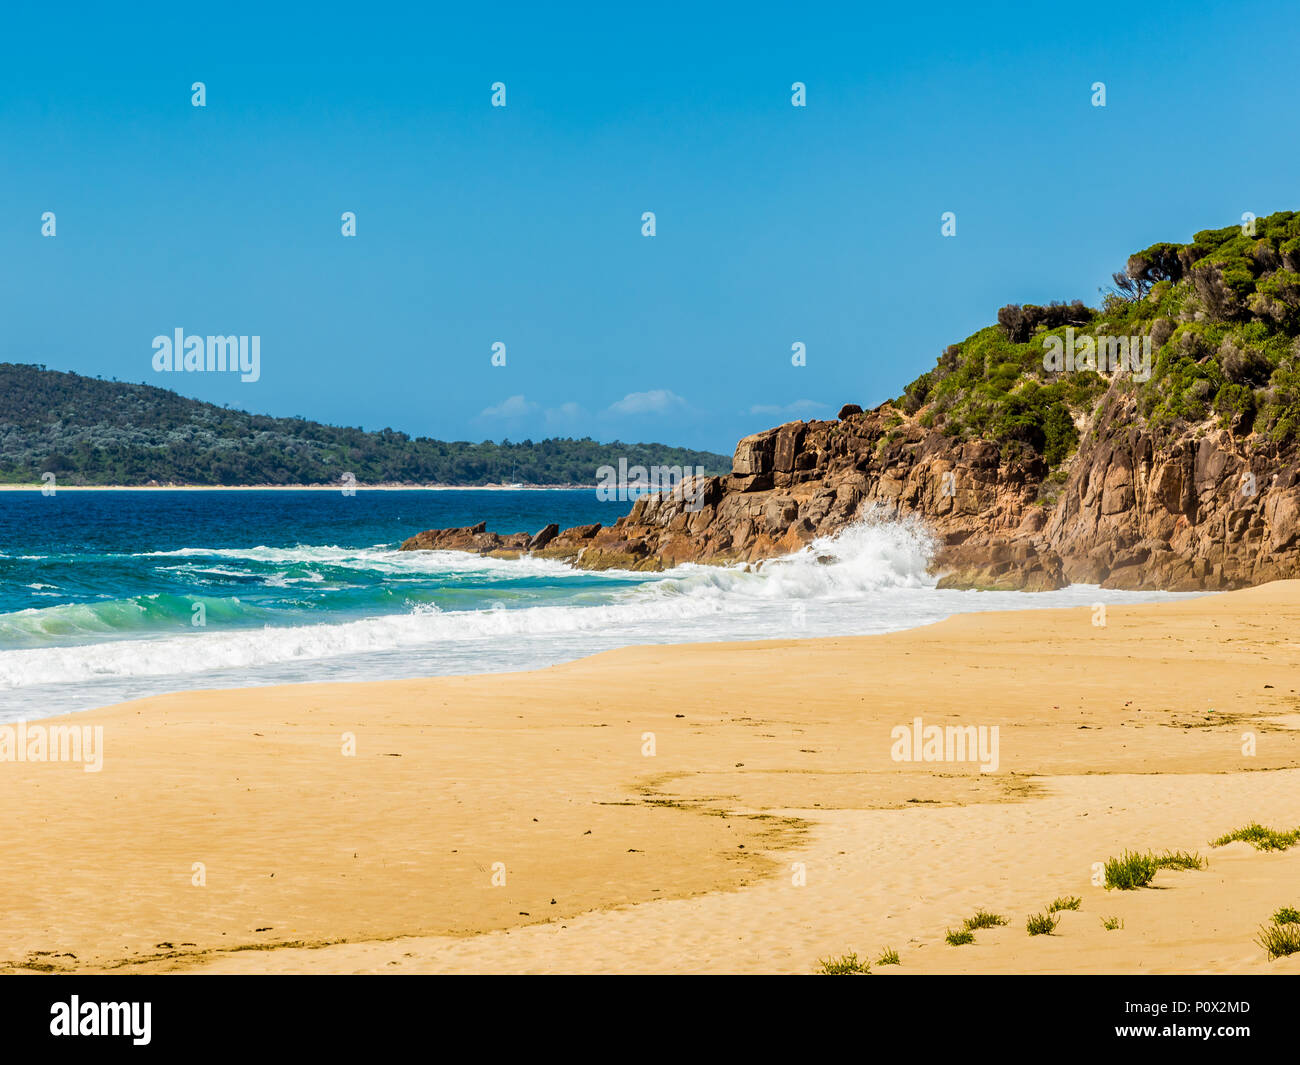 View of Zenith Beach, NSW, Australia, showing the rocky outcrop. Stock Photo